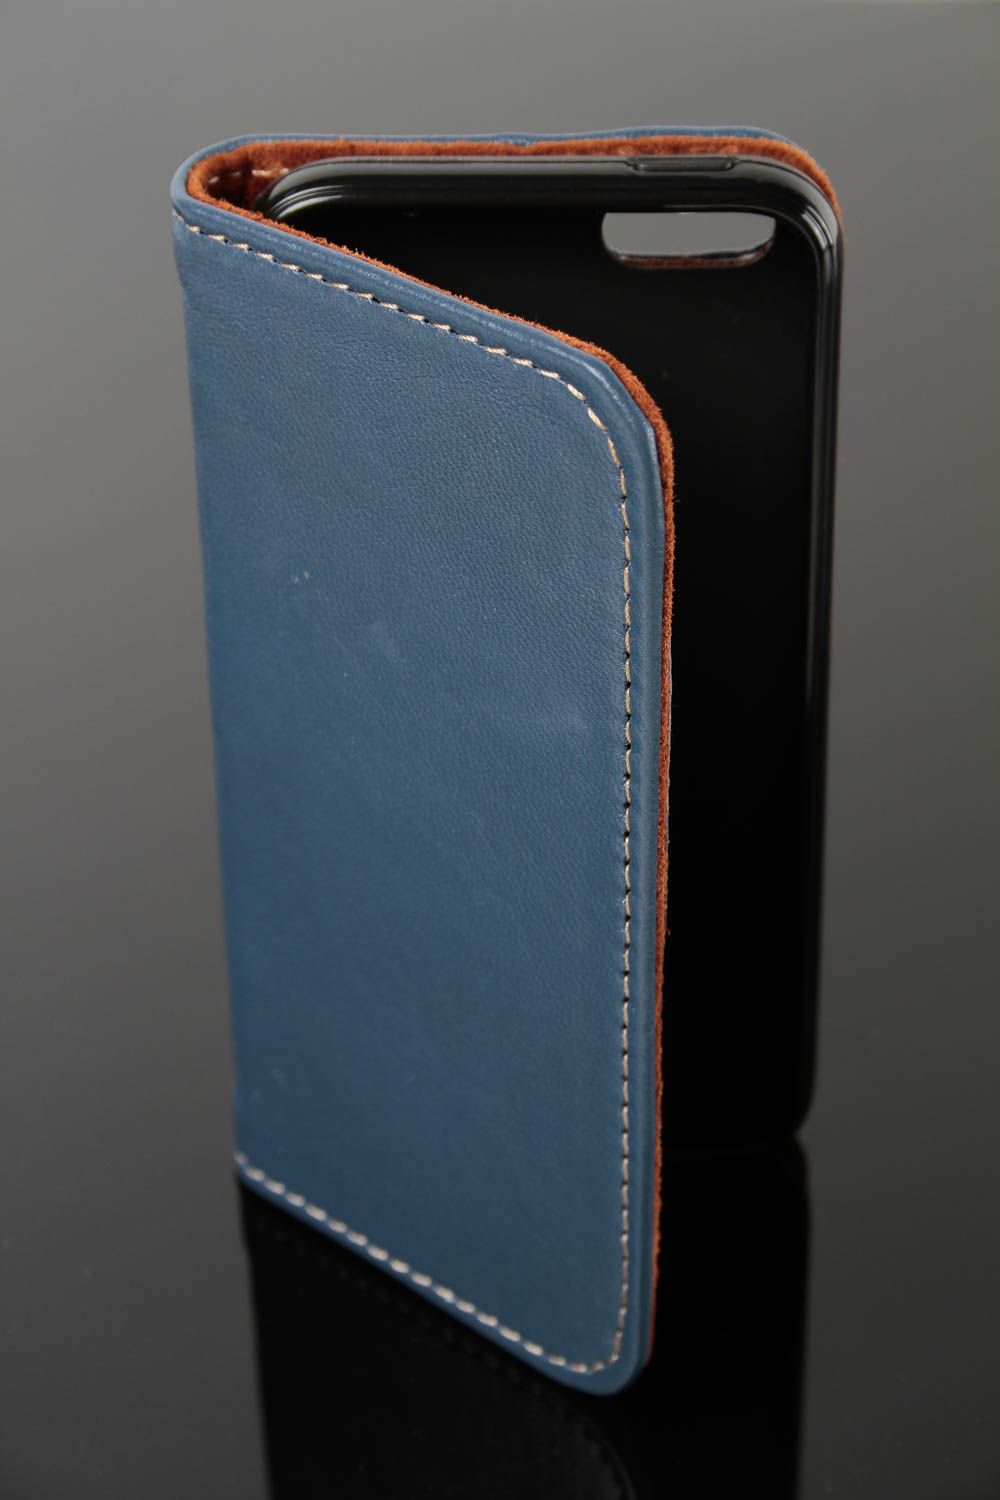 Чехол на телефон хэнд мэйд аксессуар для смартфона кожаный чехол синий фото 2